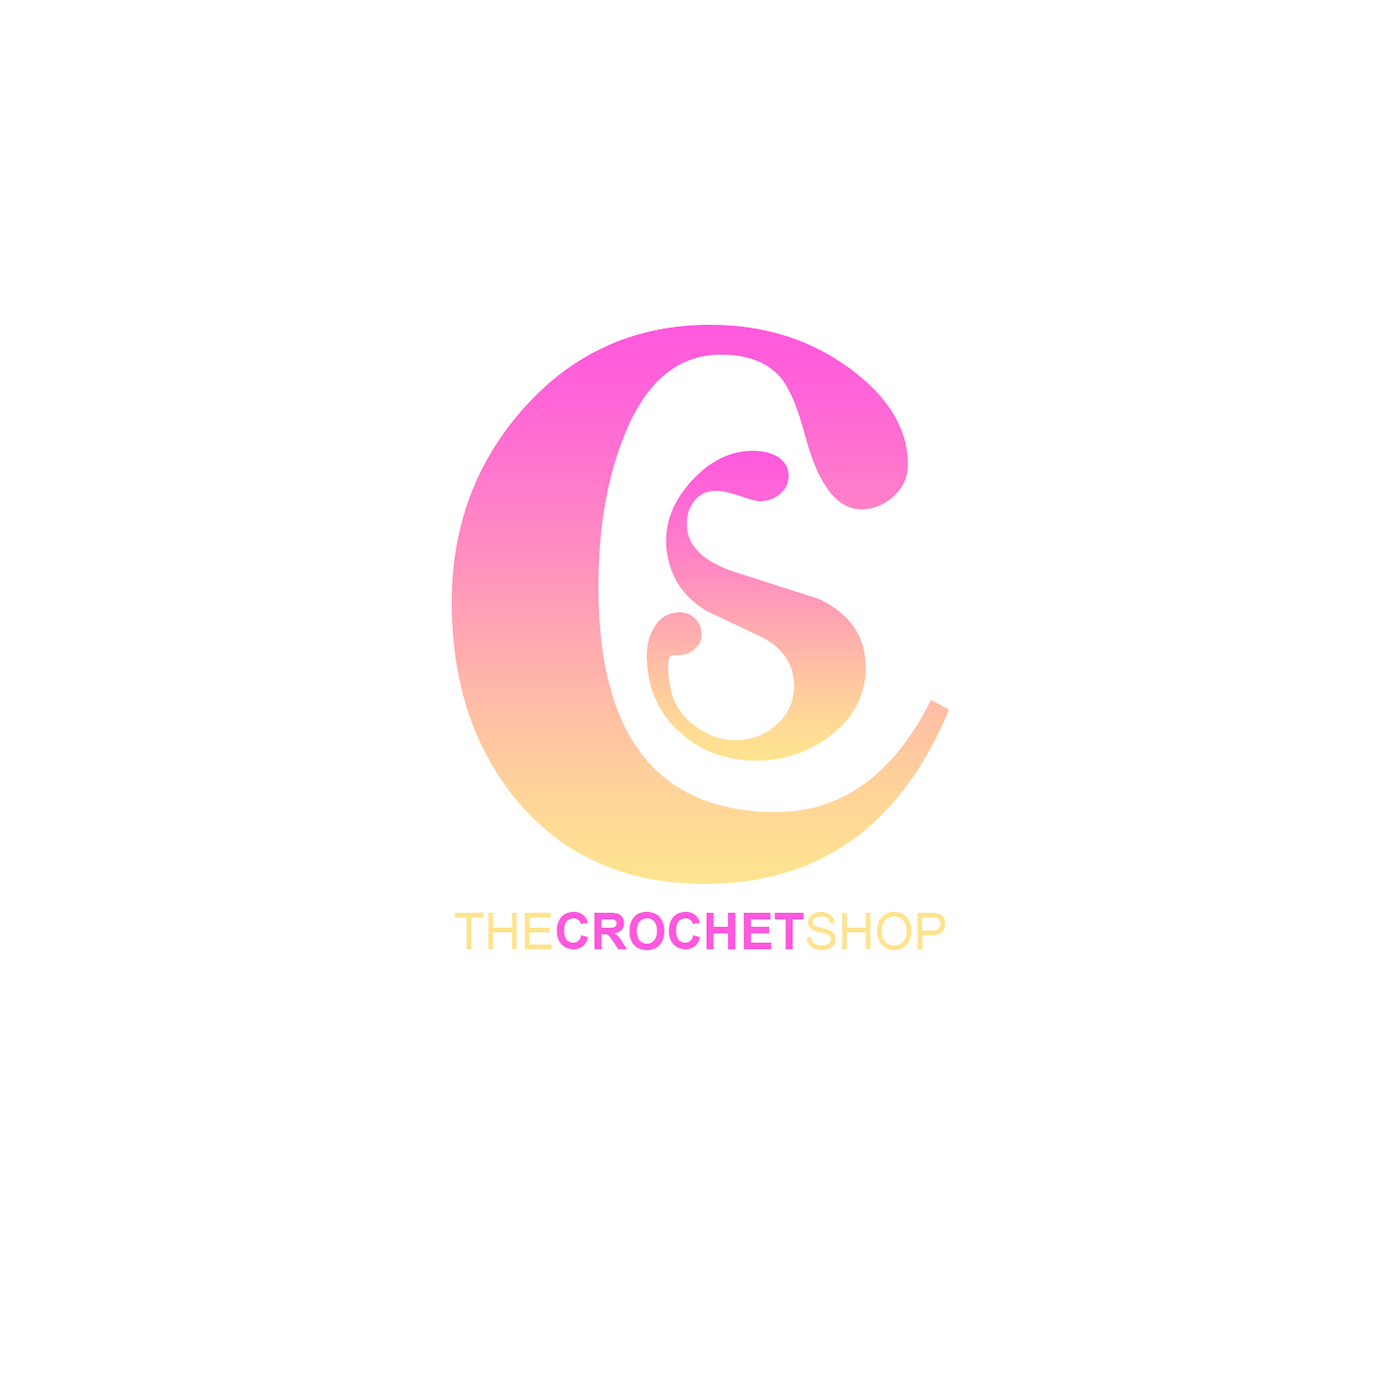 The Crochet Shop Kingtana Designs  logo Logo Design hair braids hair stylist Graphic Designer